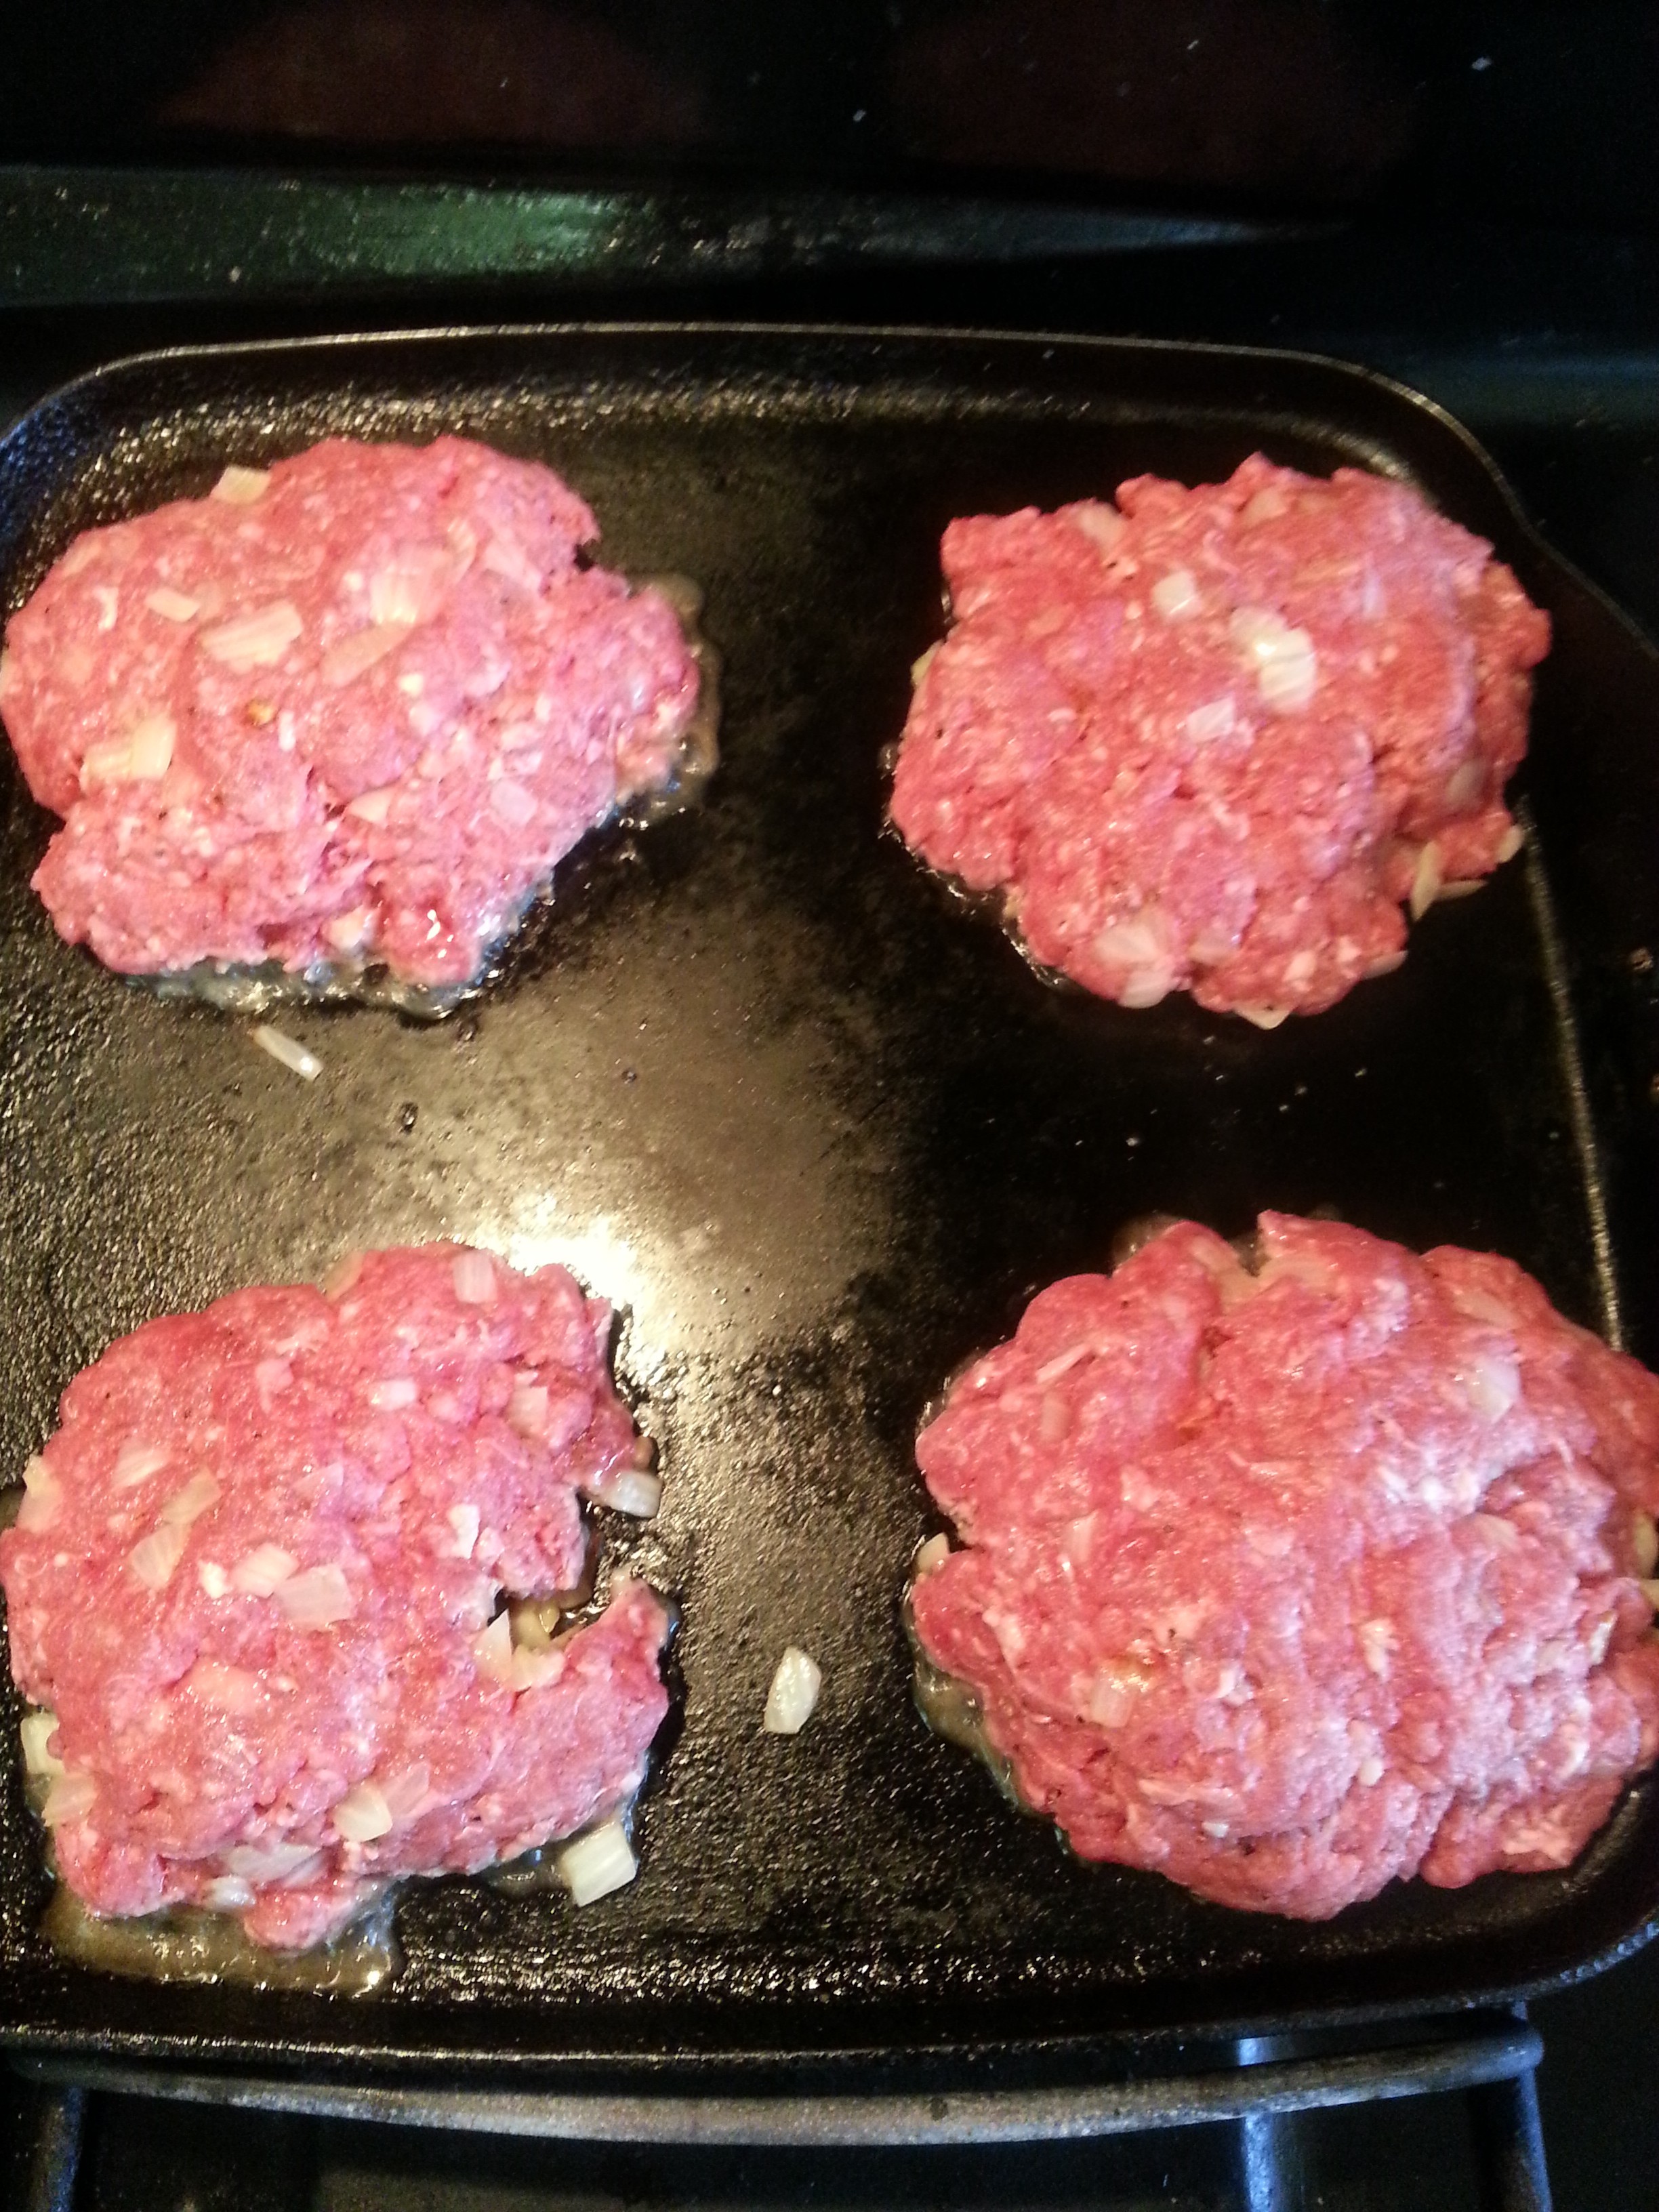 Cooking bison burgers